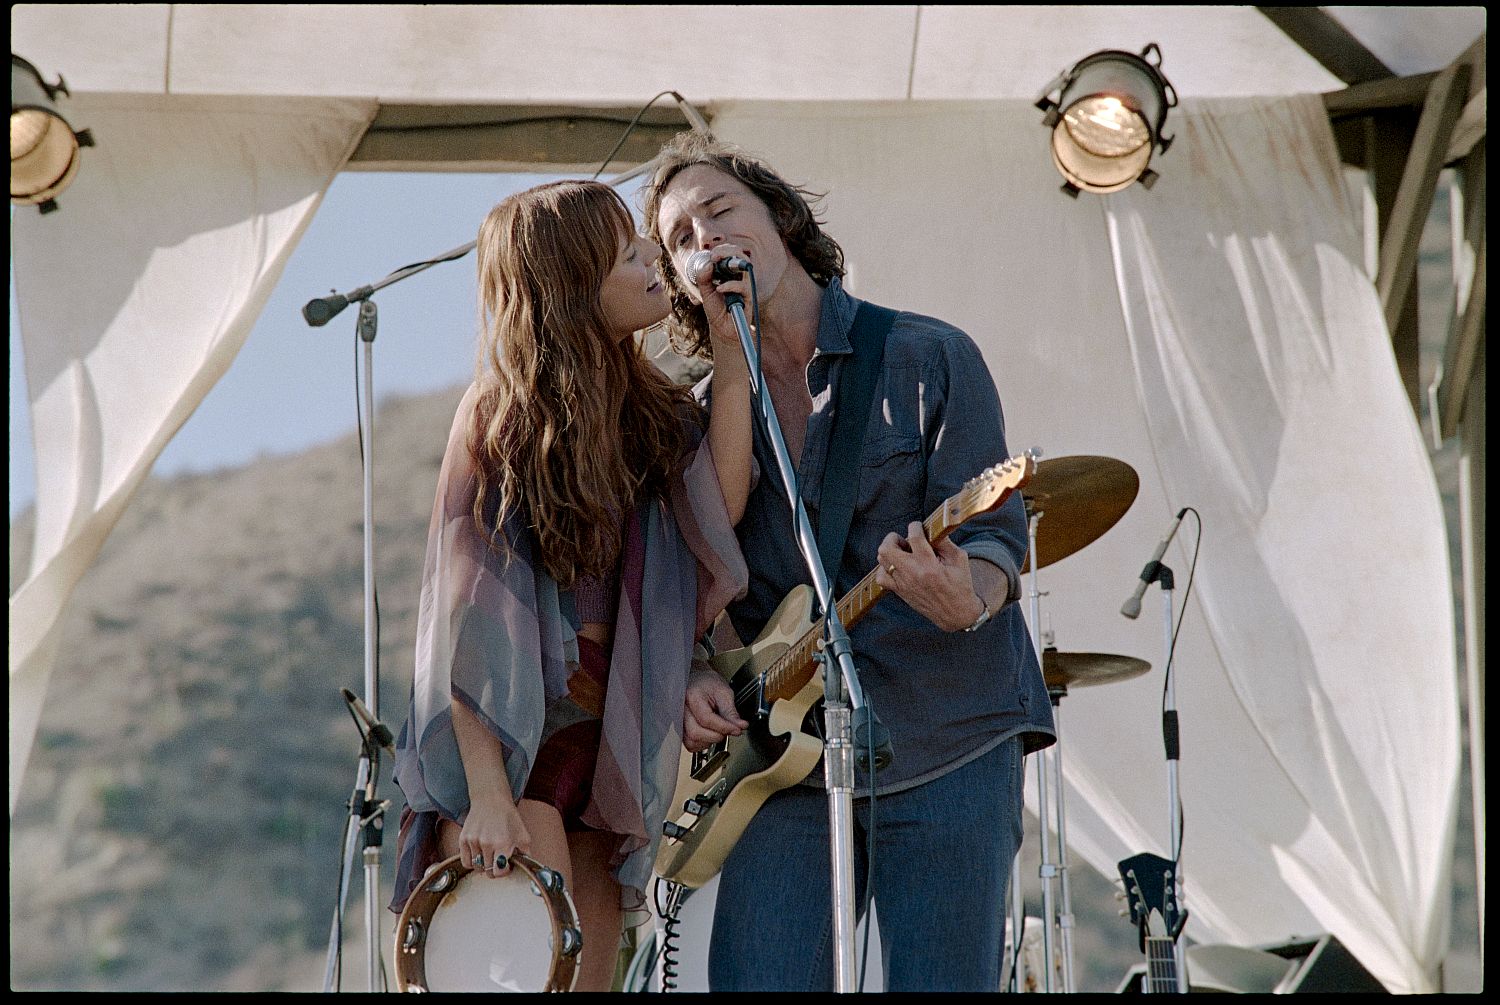 Daisy Jones & The Six Trailer kündigt Amazons Rock & Roll Drama an